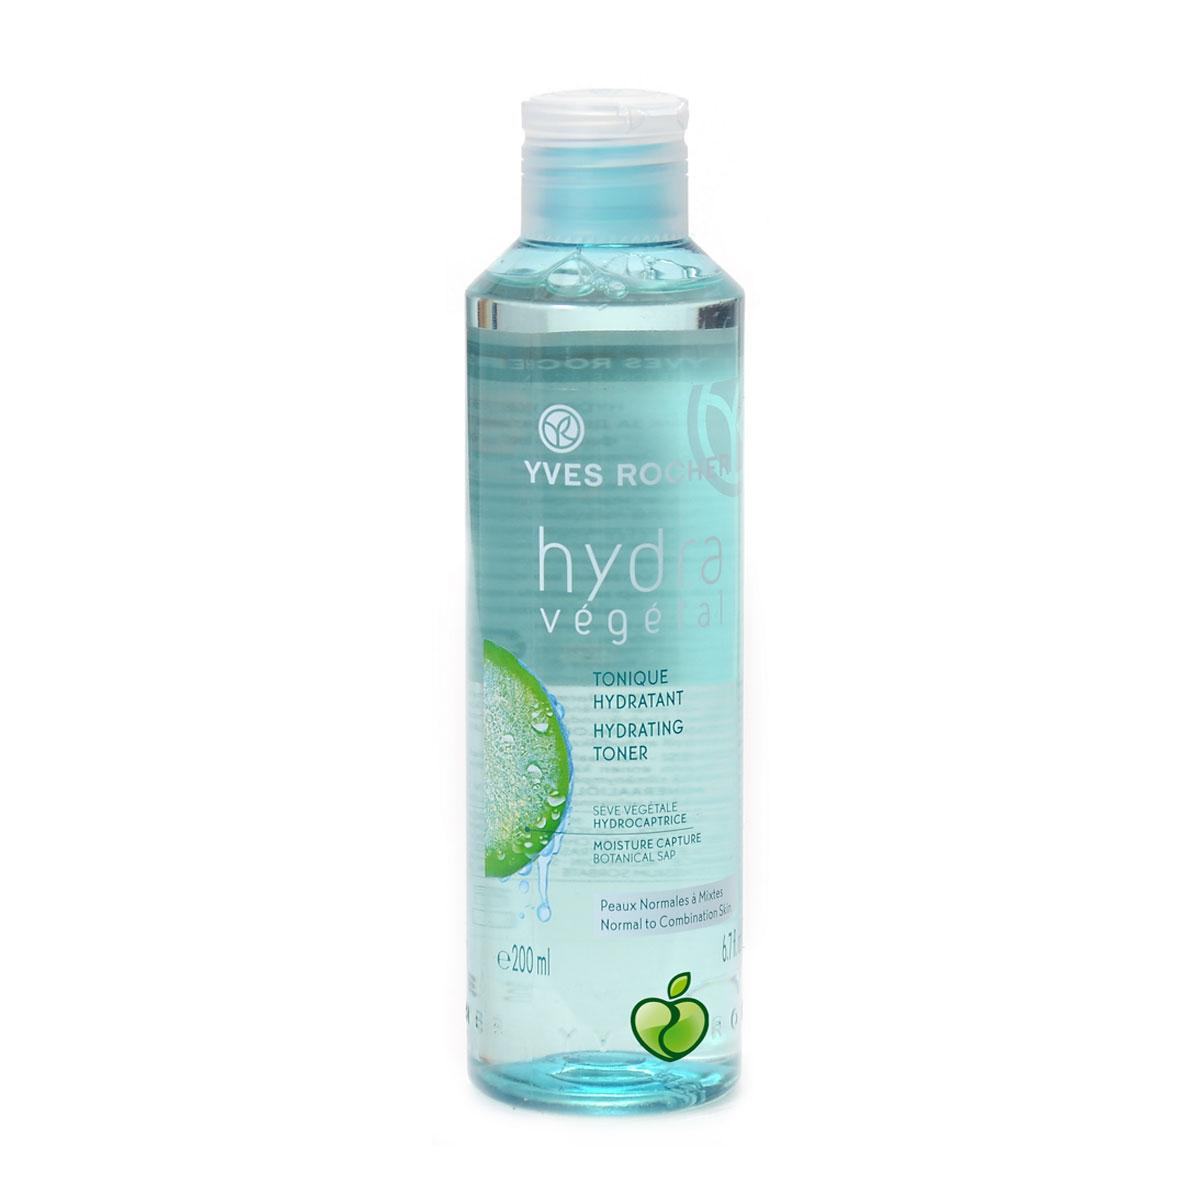 تونر آبرسان هیدرا وژتال - Hydra Vegetal Hydrating Toner